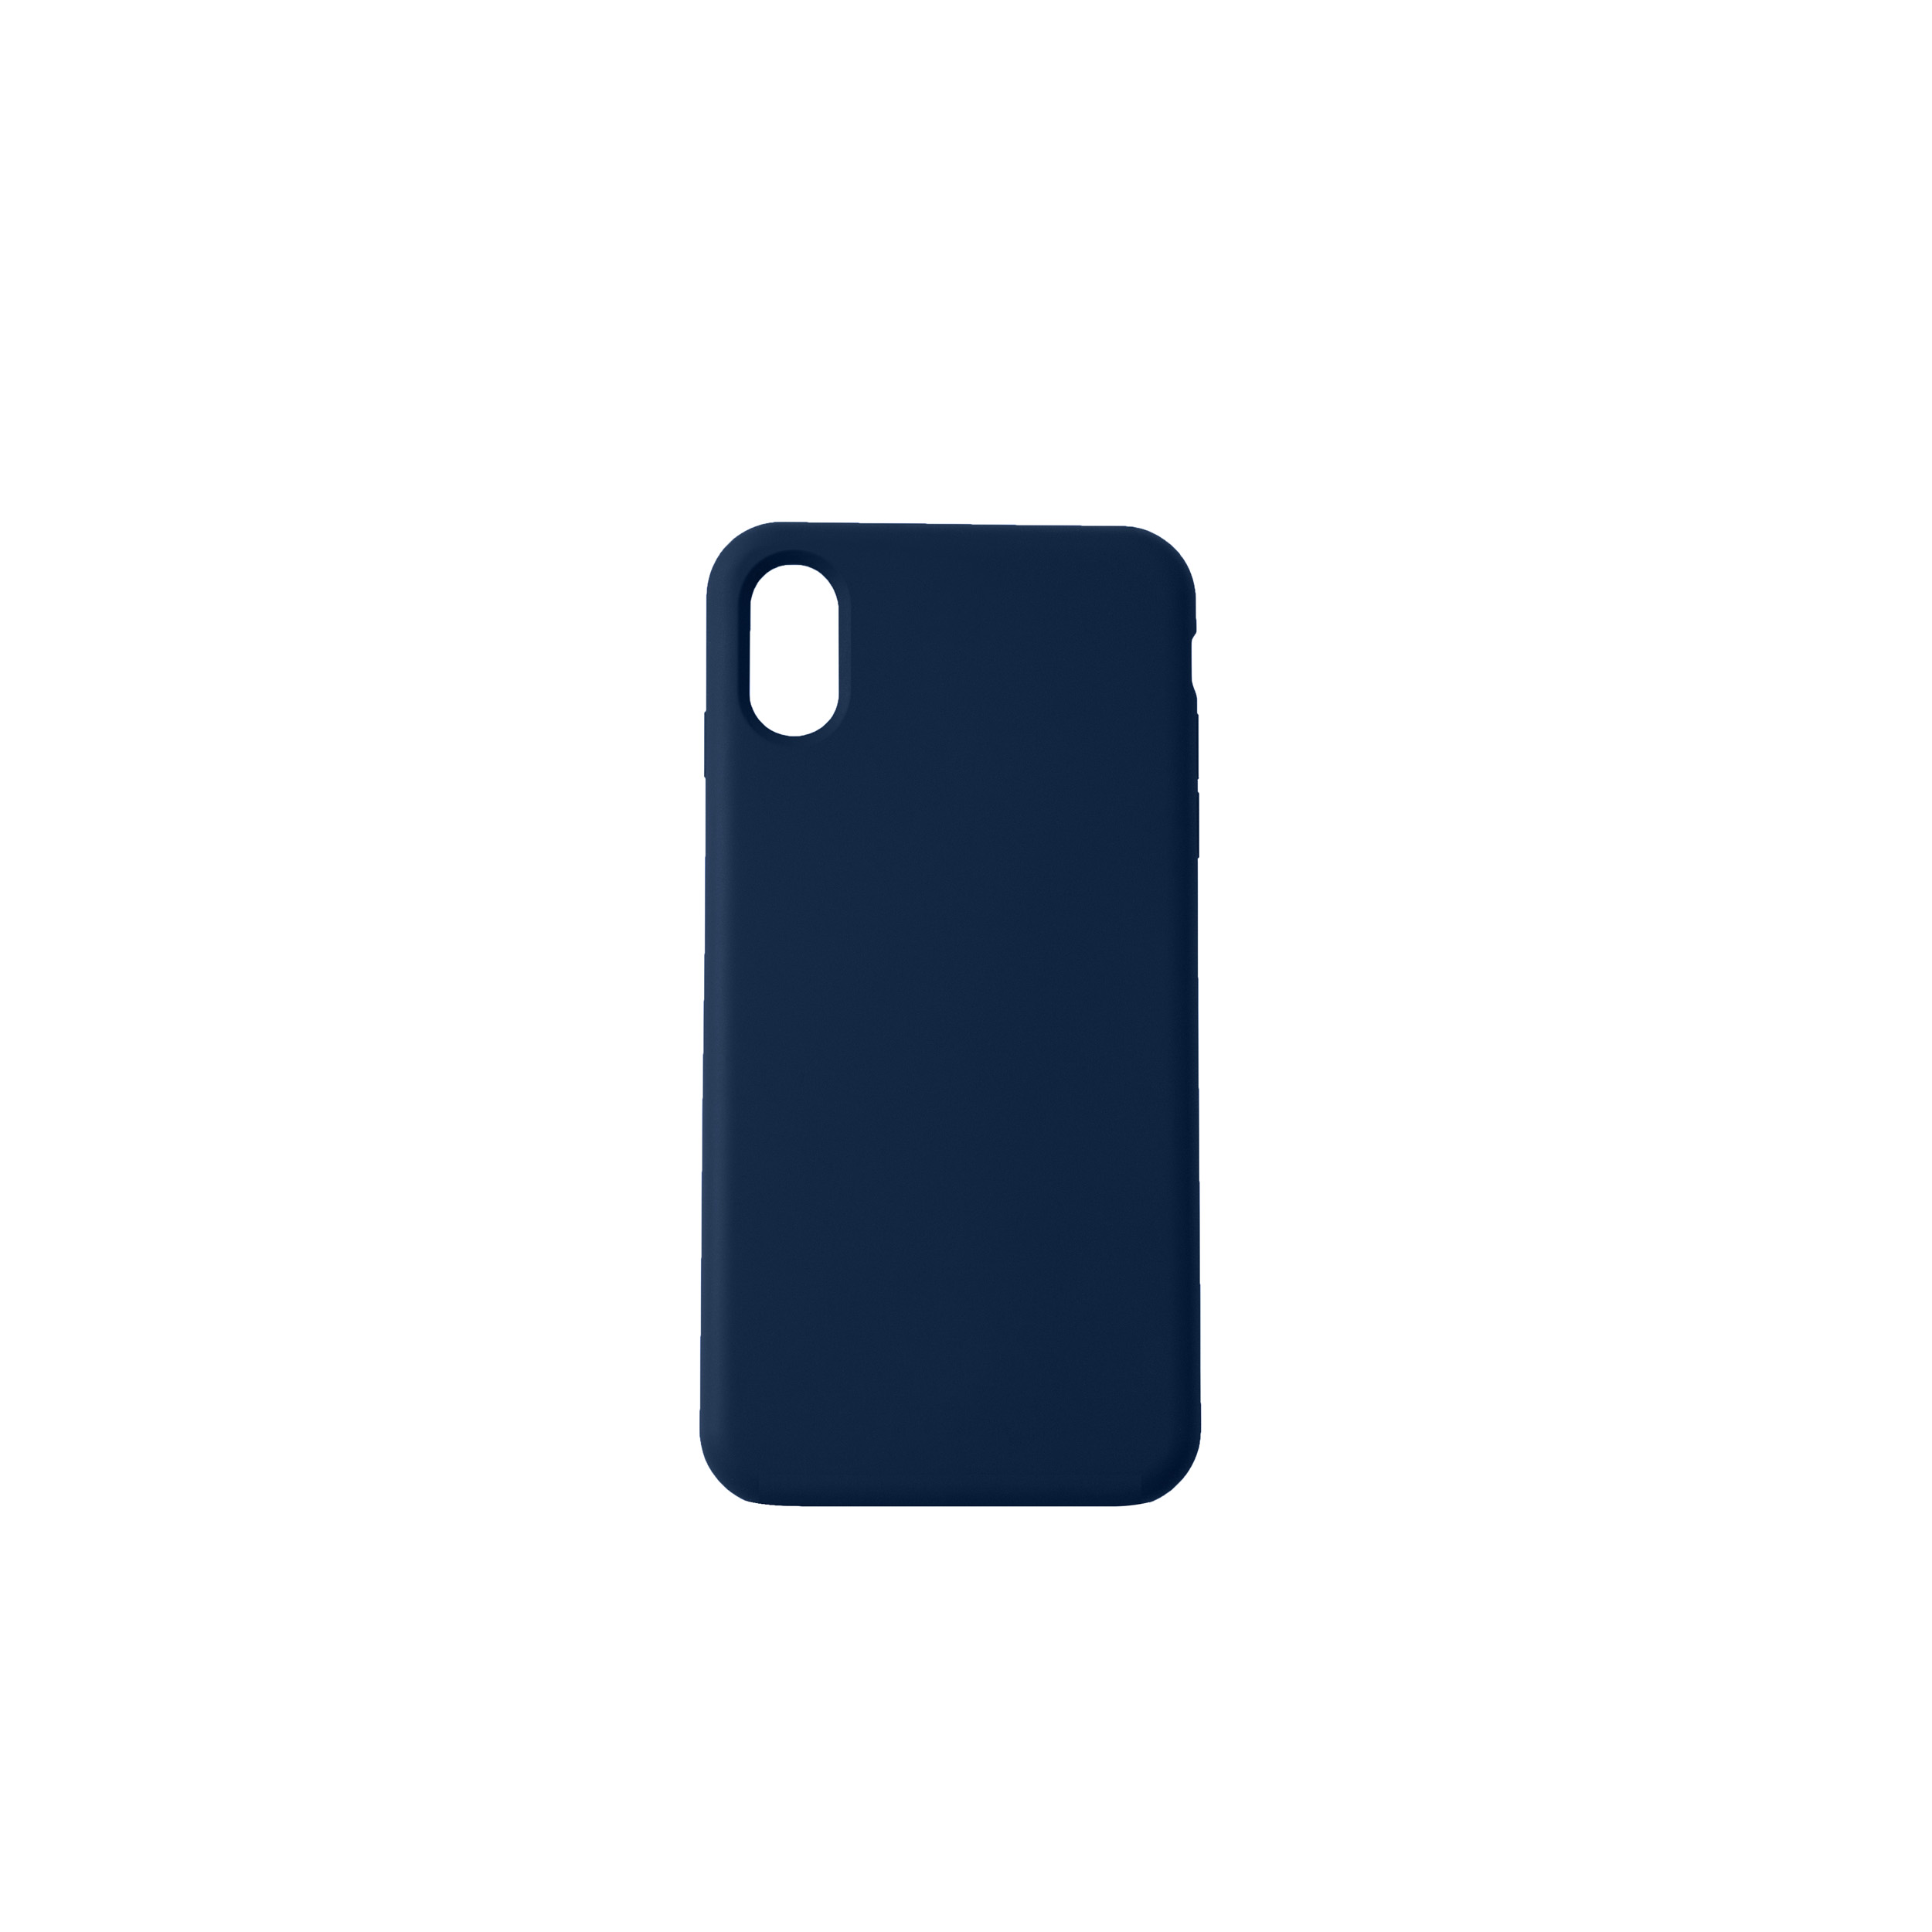 Sargasso Apple, Max Silikon sargasso Blue, blue Full XS Max, KMP XS iPhone iPhone Schutzhülle für Cover,